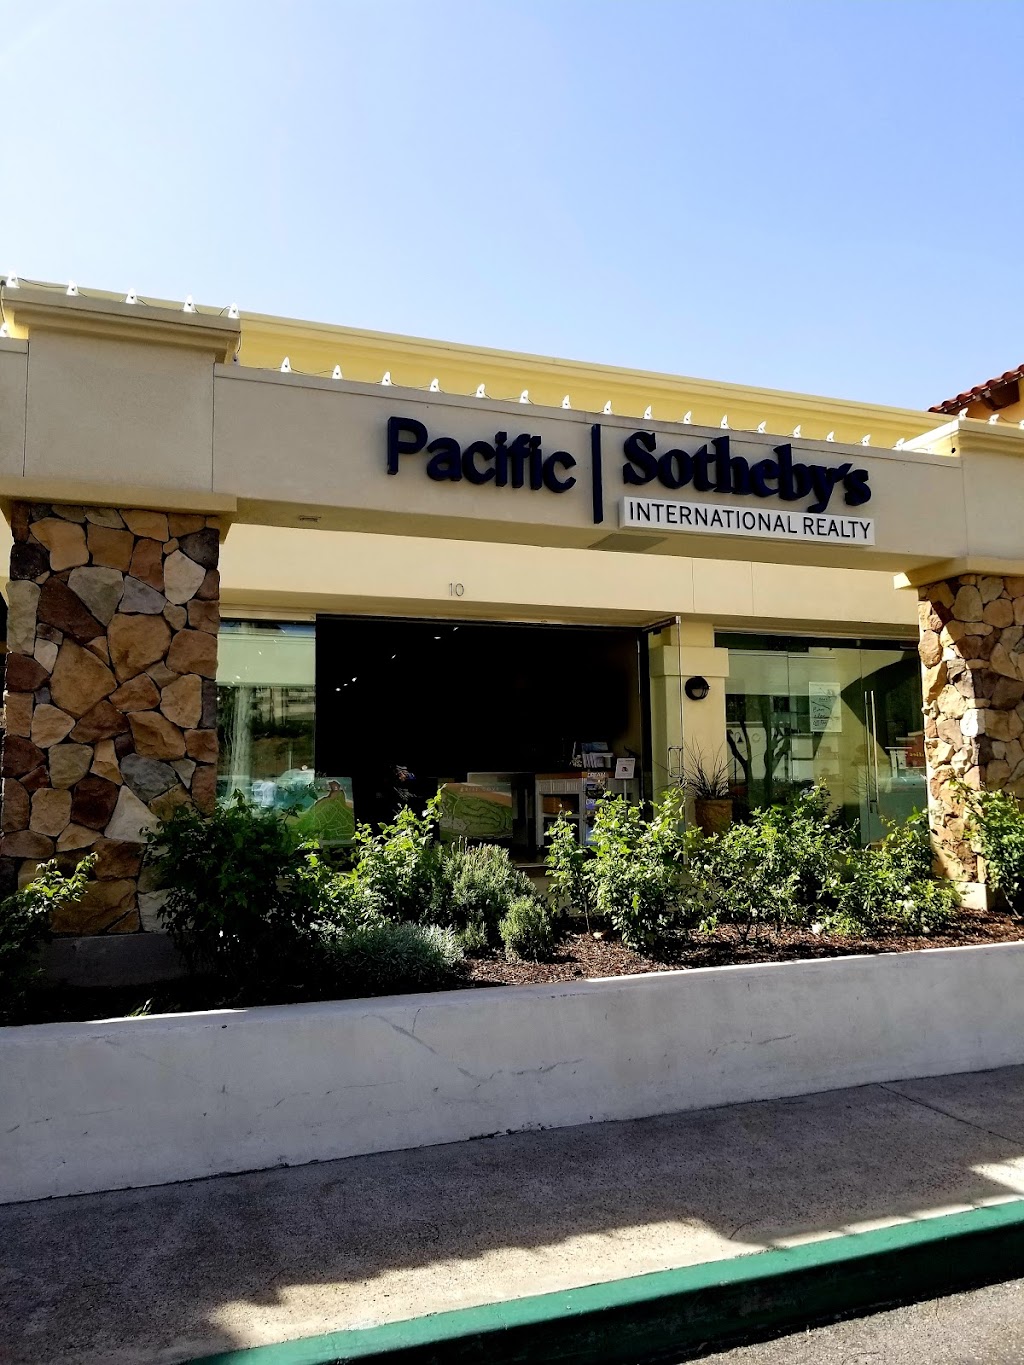 Pacific Sothebys International Realty - real estate agency  | Photo 1 of 4 | Address: 10 Monarch Bay Plaza, Dana Point, CA 92629 | Phone: (949) 545-2820